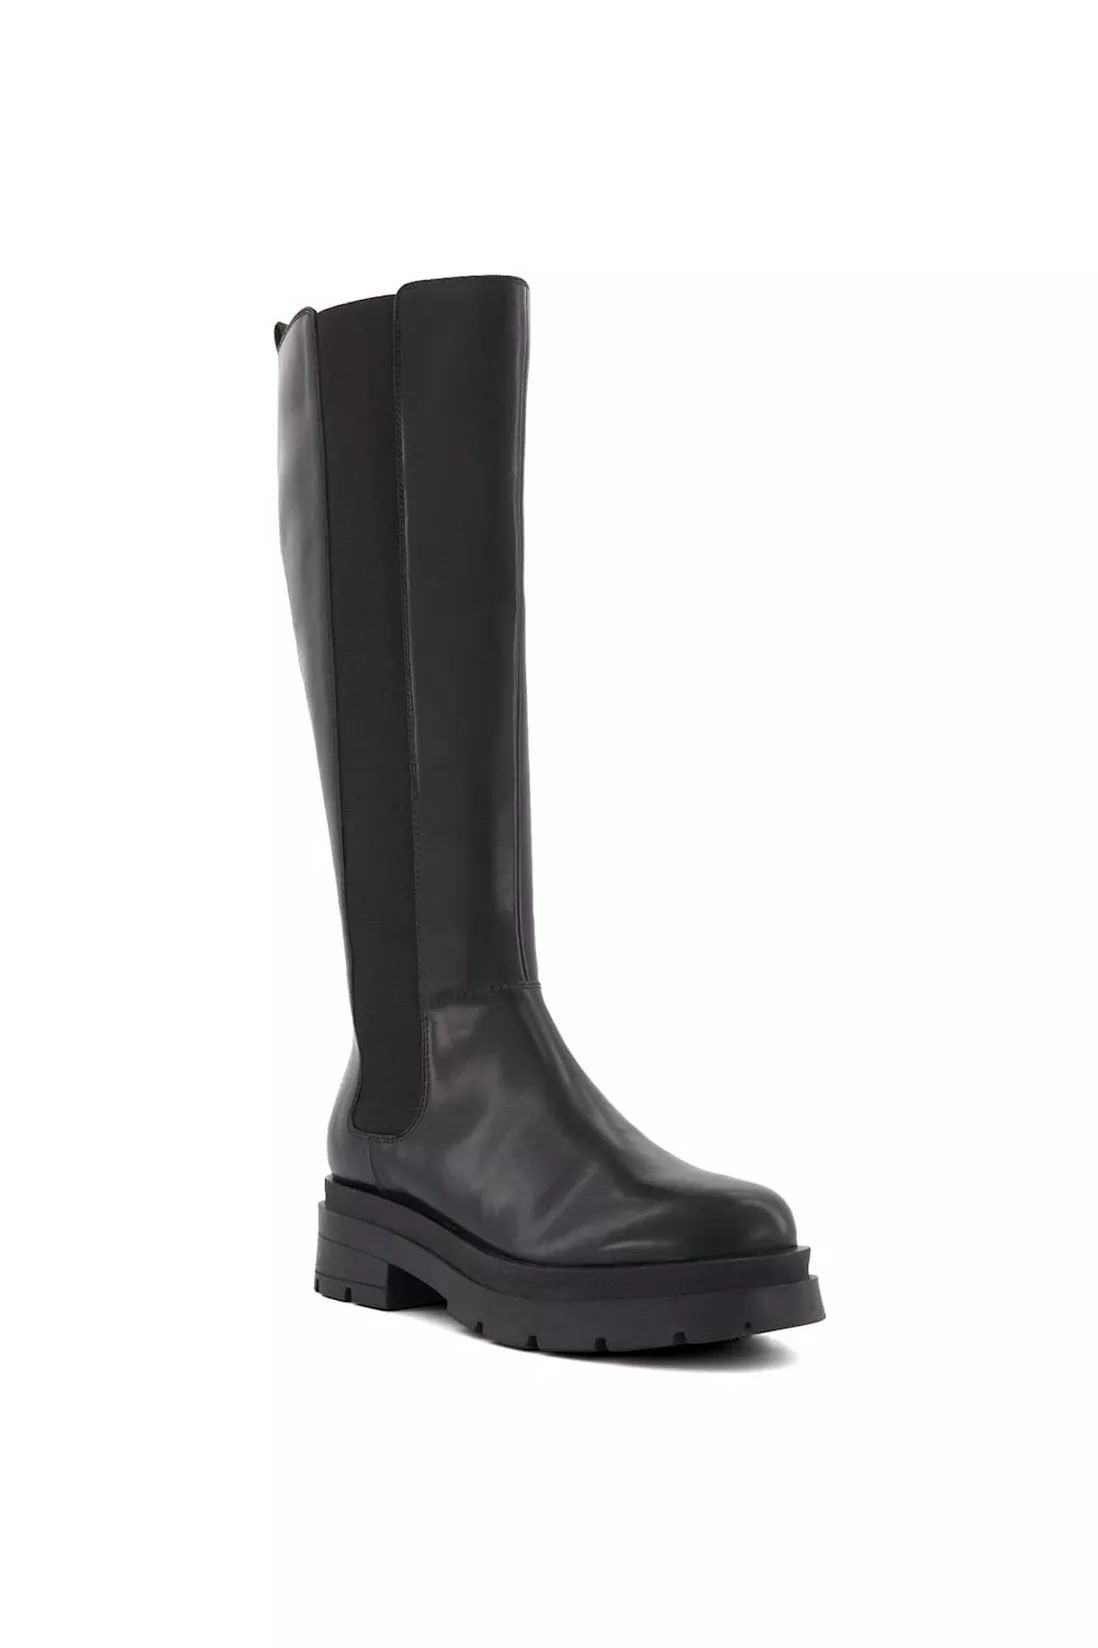 Boots | 'Tammie' Leather Knee High Boots | Dune London | Debenhams UK